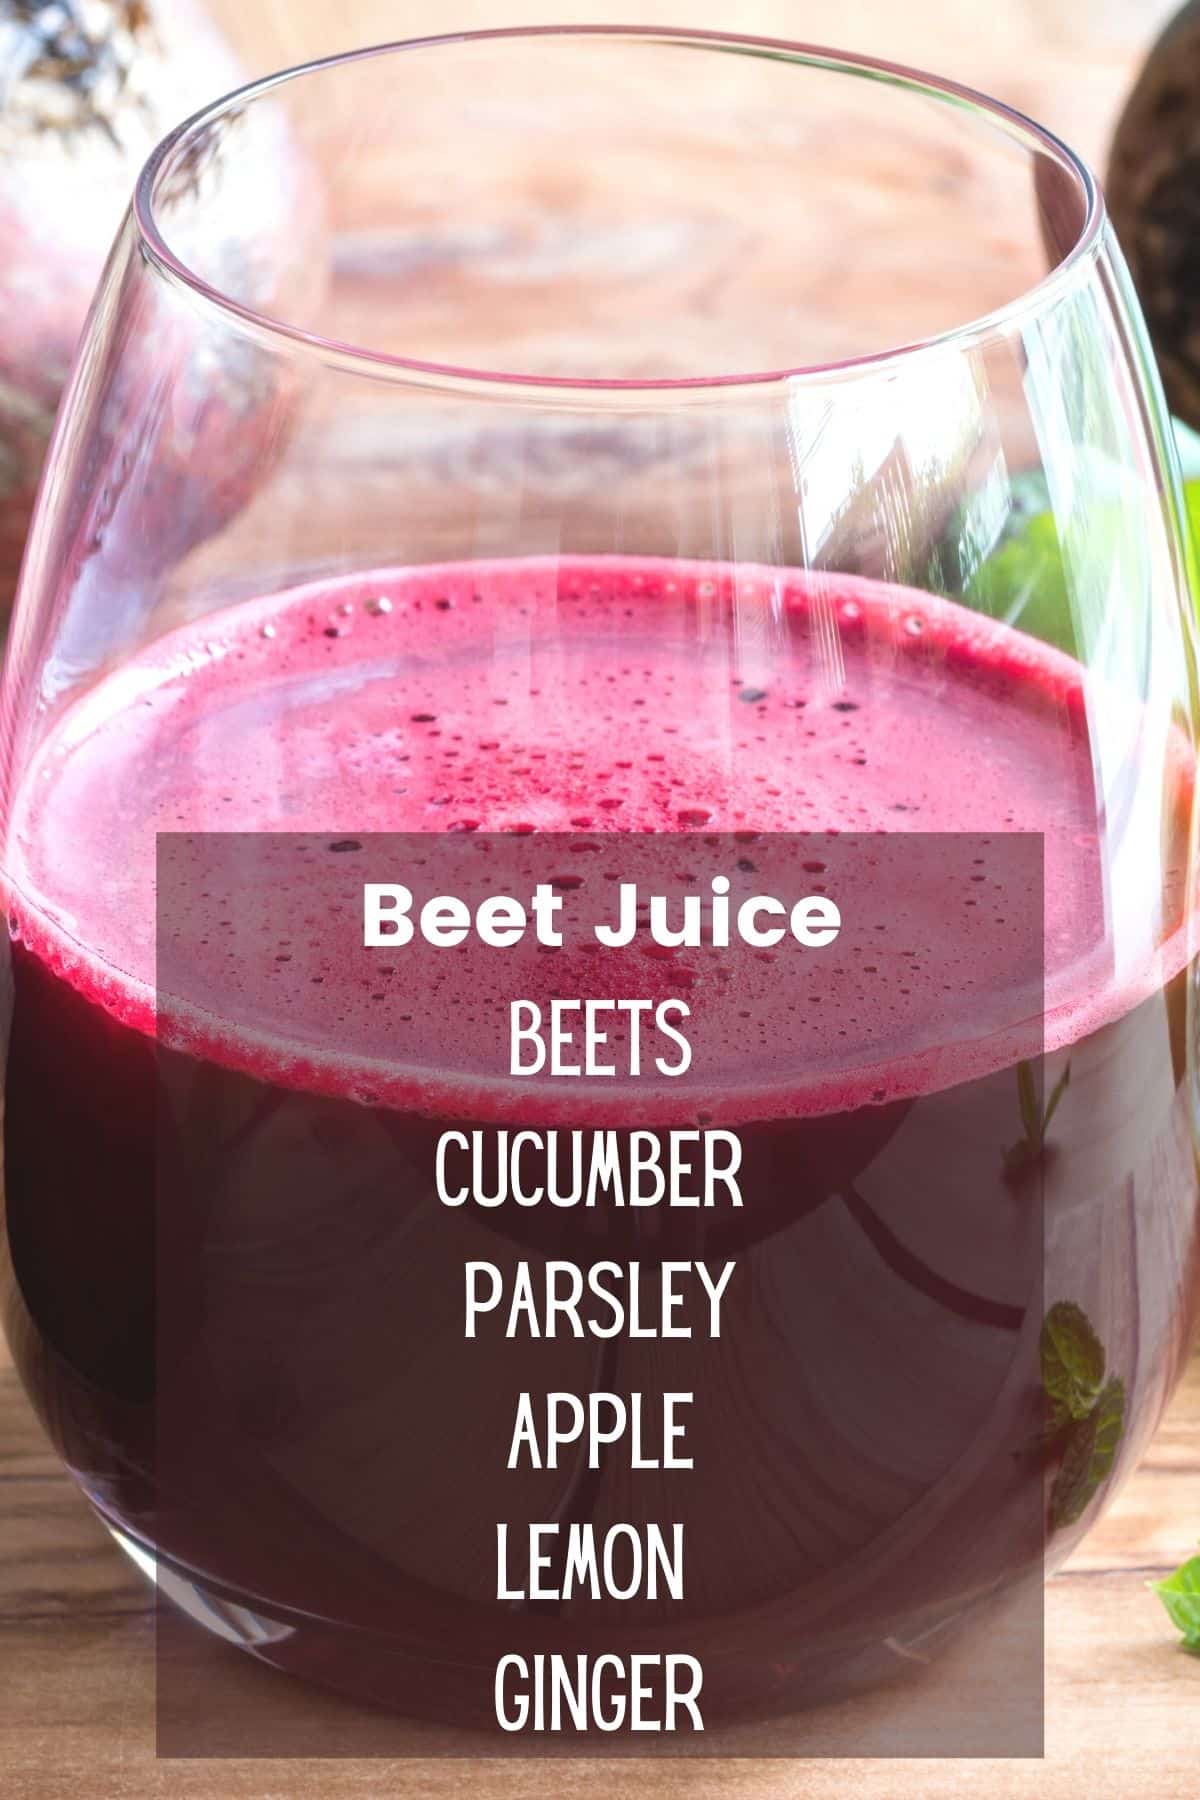 beet juice infographic with ingredients.